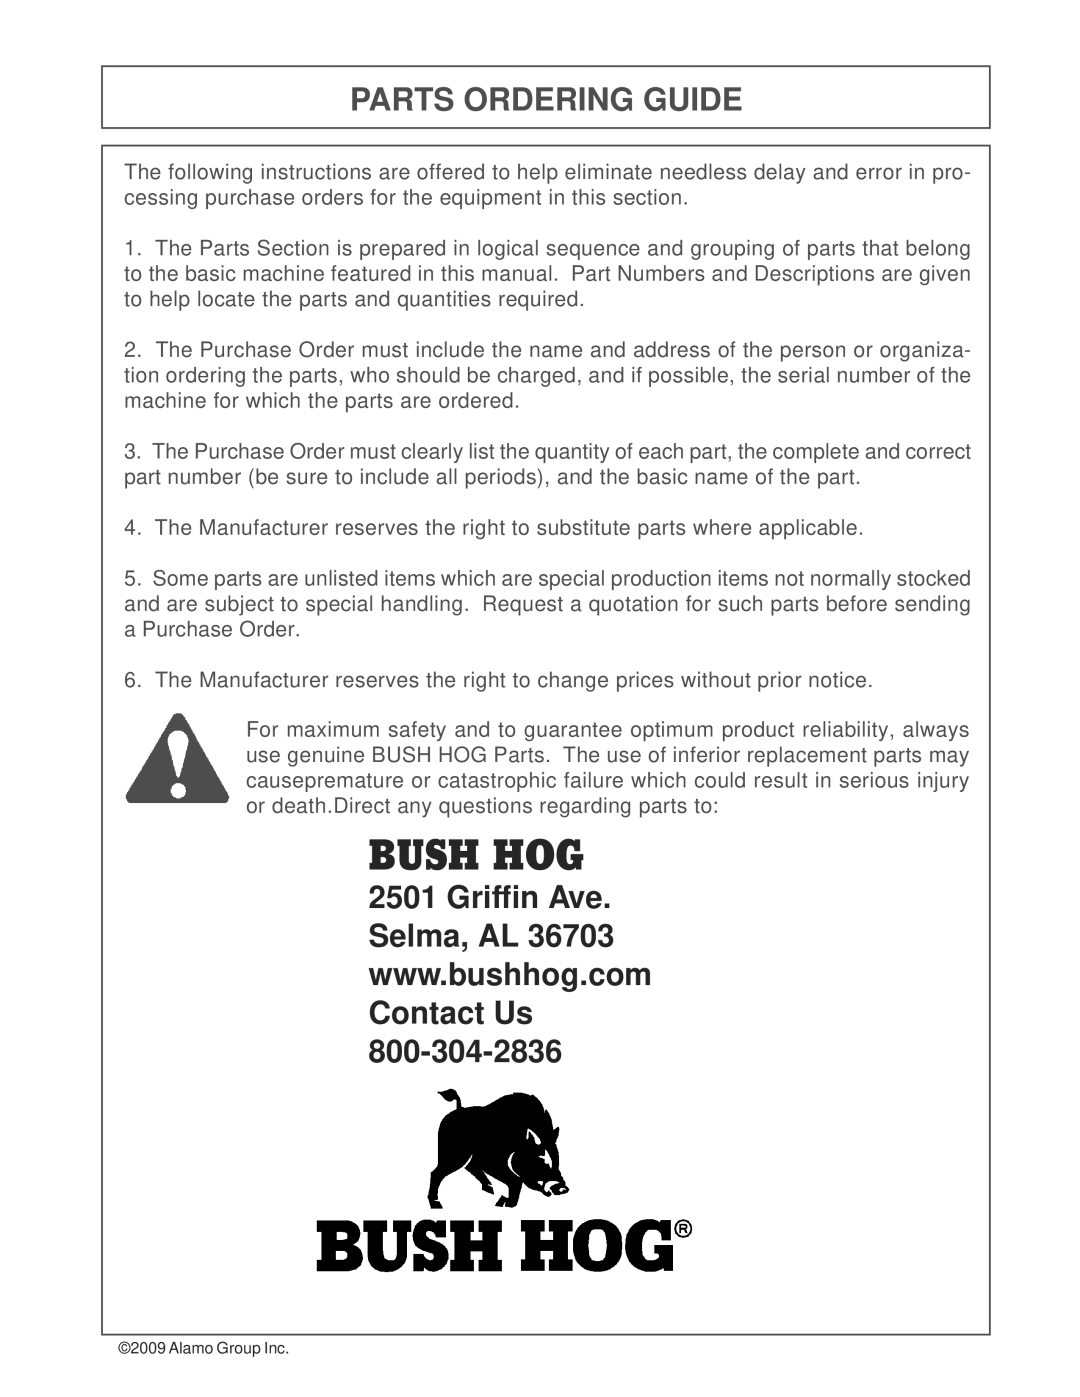 Bush Hog 1747 manual Bush Hog, Parts Ordering Guide 